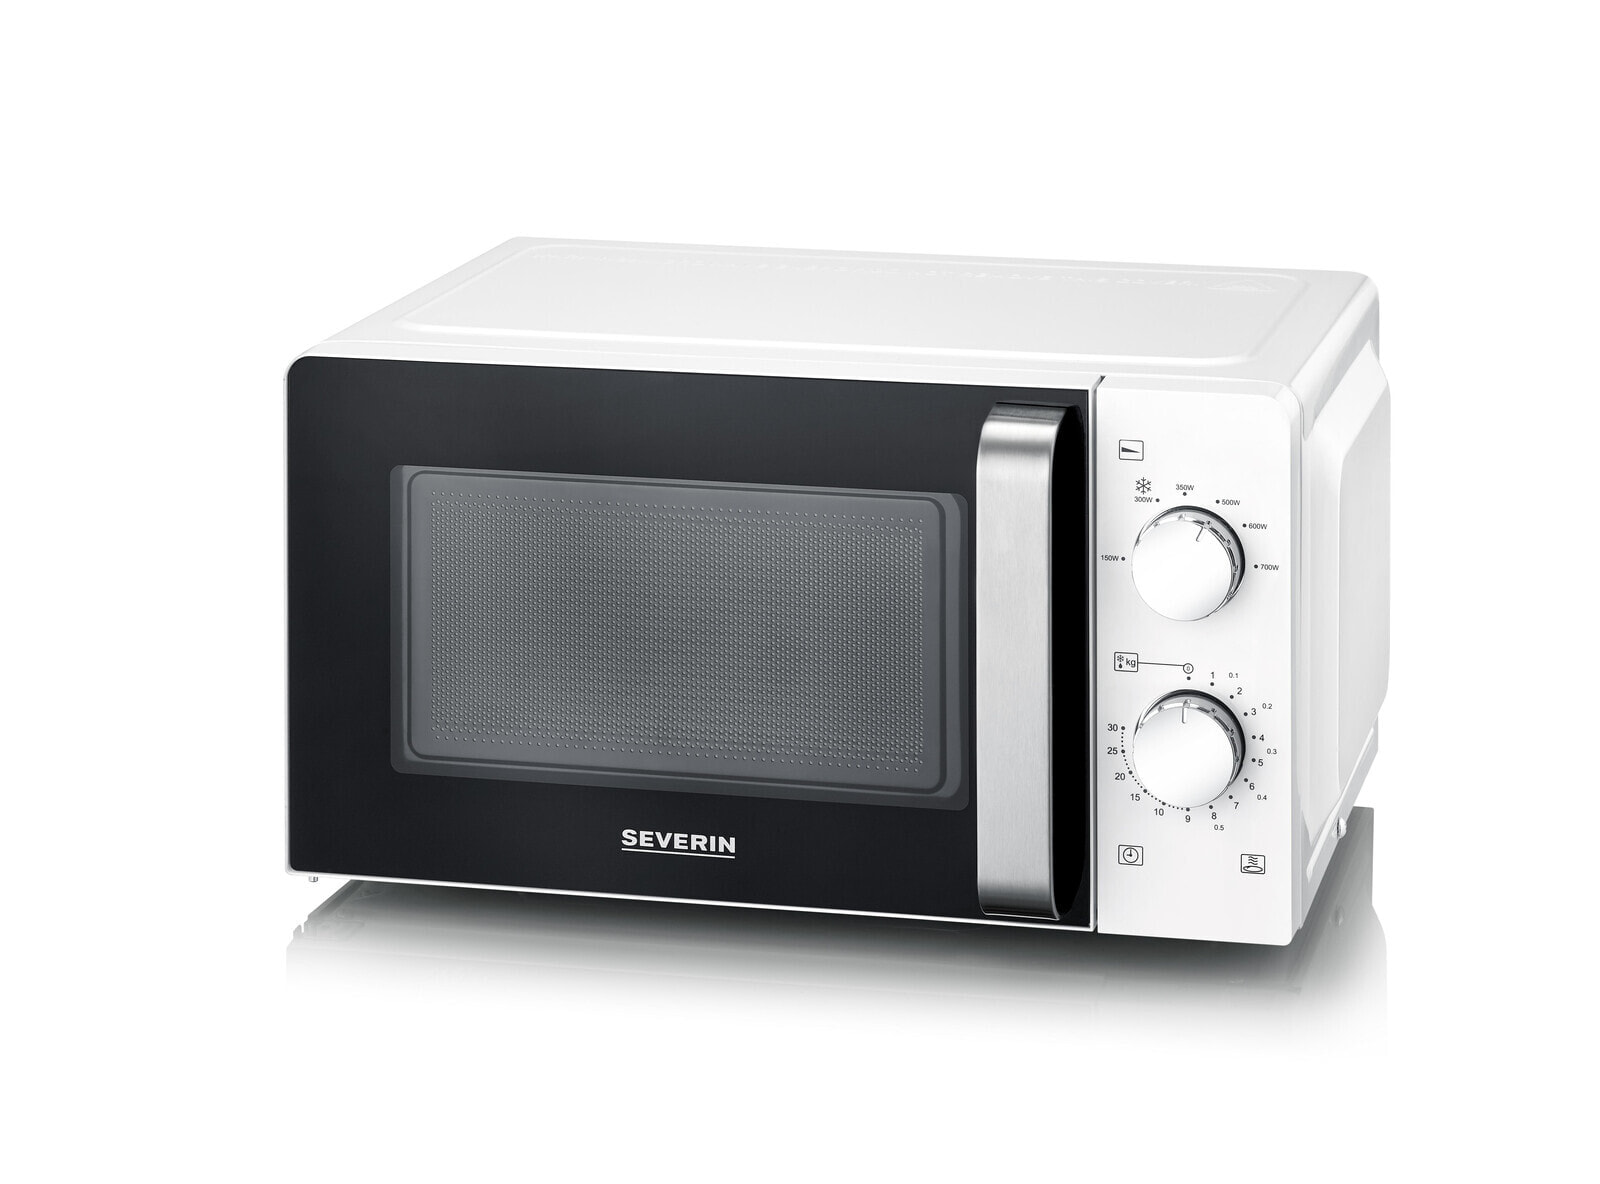 SEVERIN MW 7885 - Countertop - Solo microwave - 17 L - 700 W - Rotary - Black - White